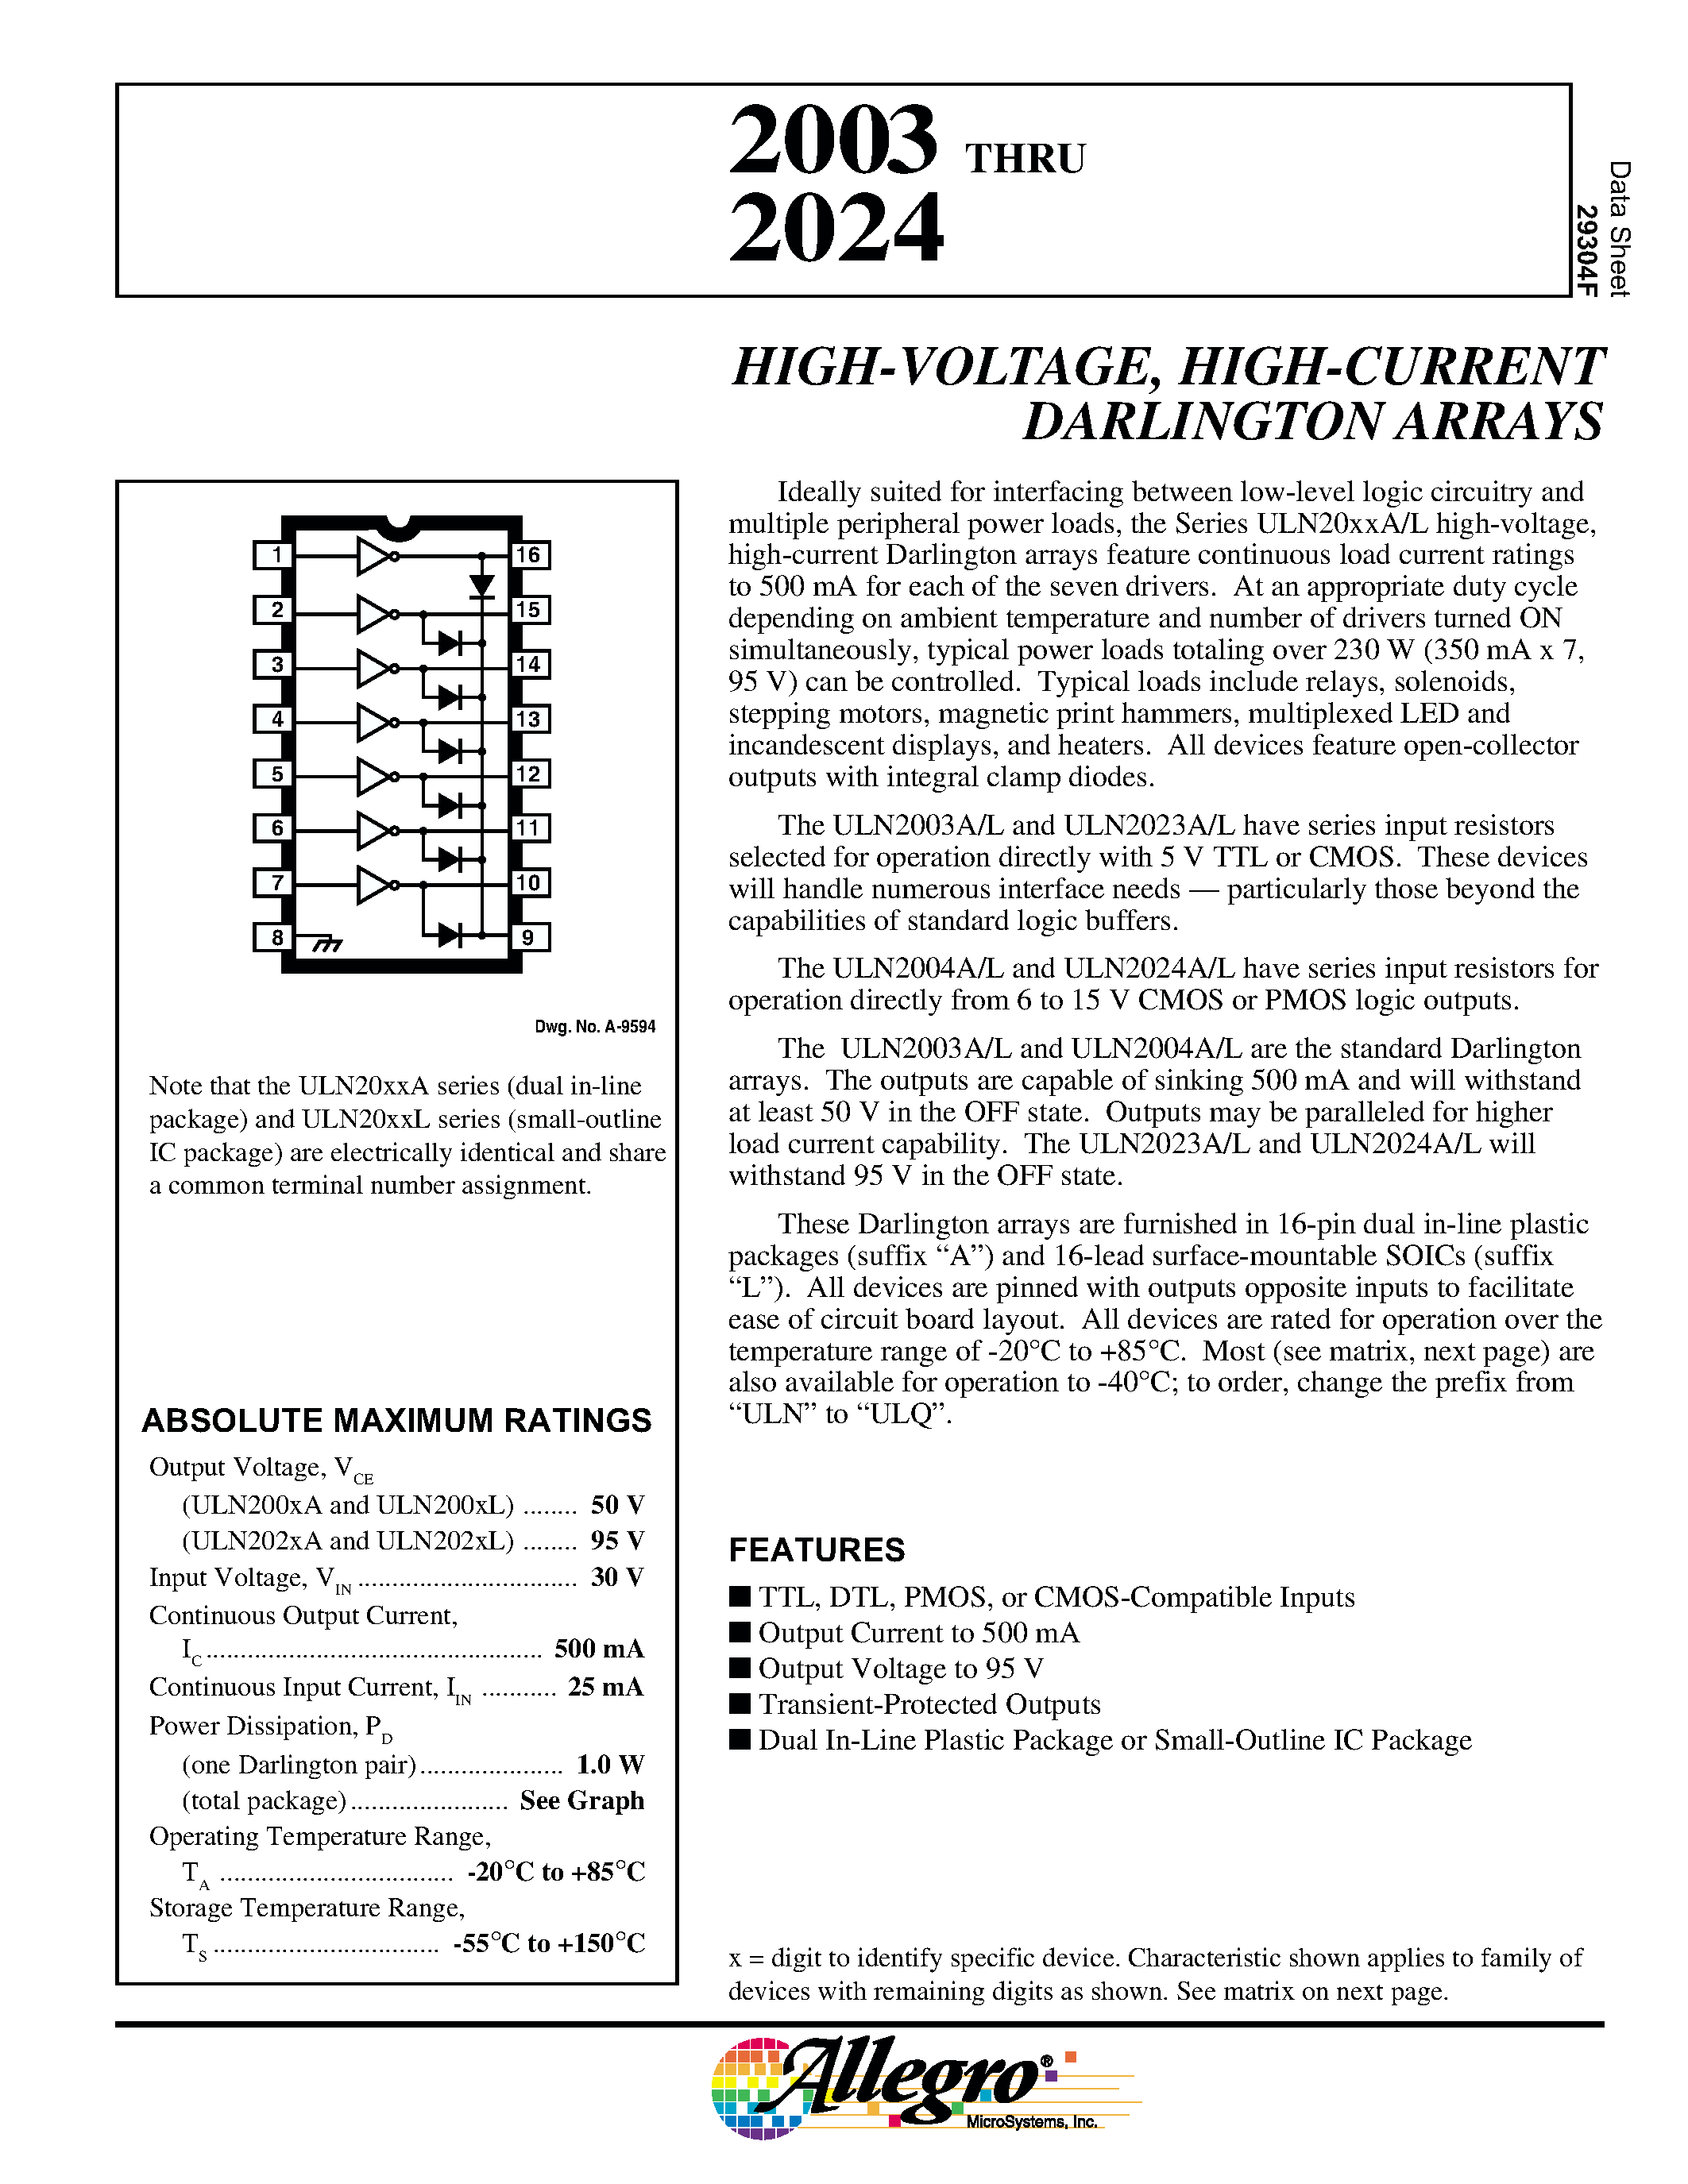 Datasheet ULN2024L - HIGH-VOLTAGE/ HIGH-CURRENT DARLINGTON ARRAYS page 1